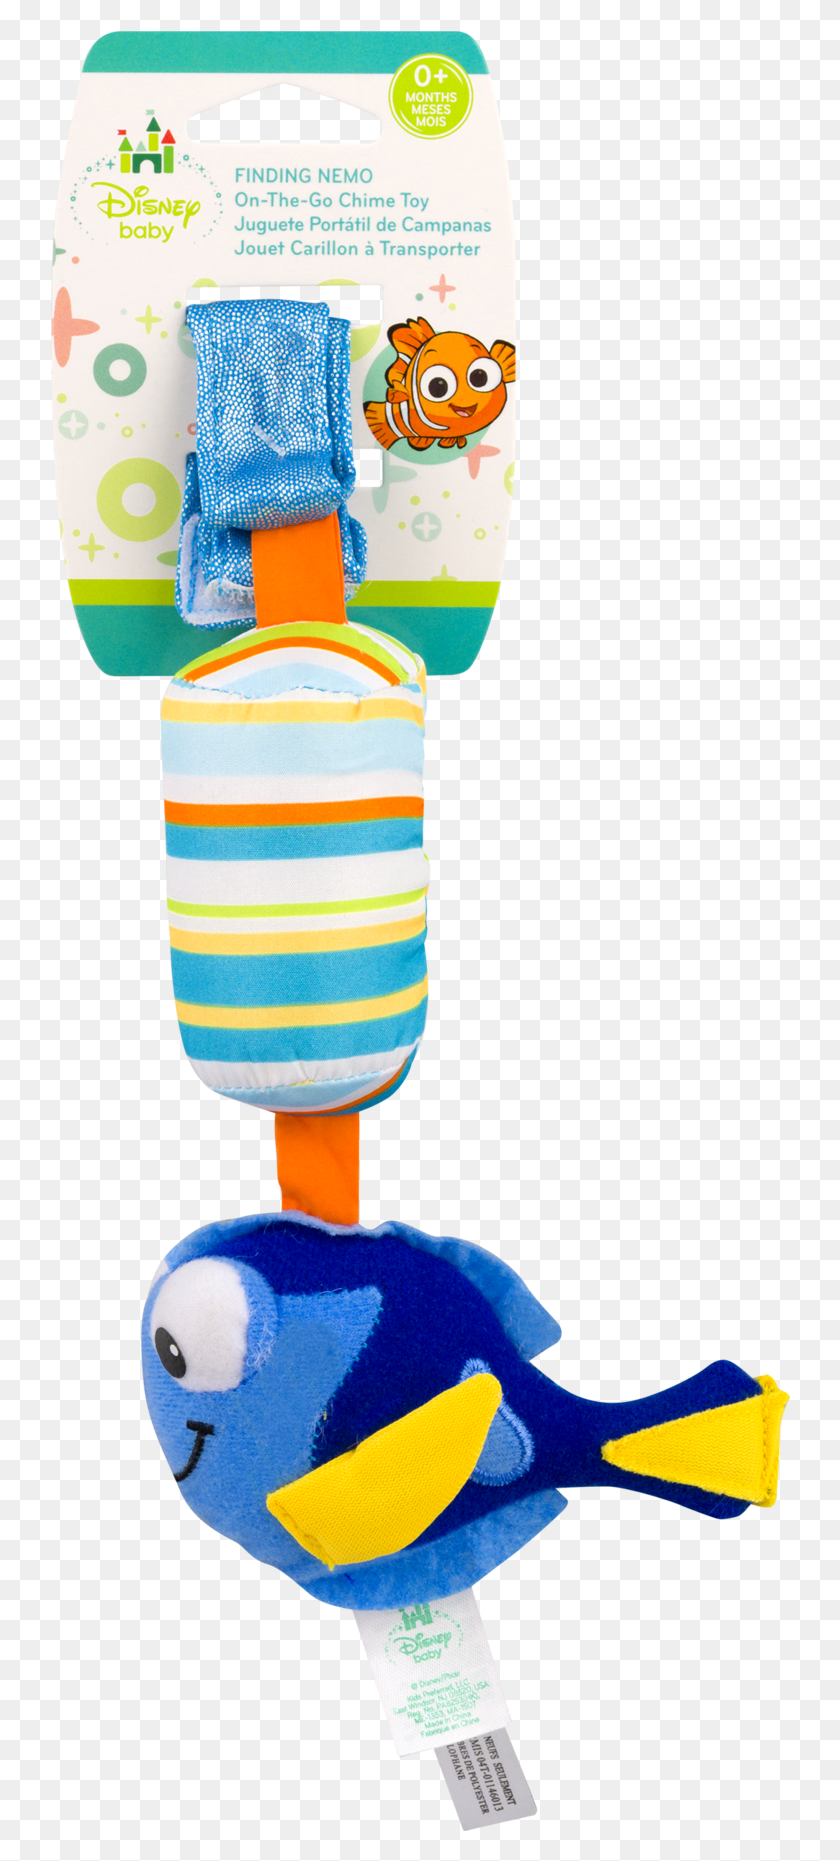 740x1801 Disney Baby Buscando A Nemo On The Go Chime Toy 0 Meses De Peluche De Juguete, Ropa, Vestimenta, Bebida Hd Png